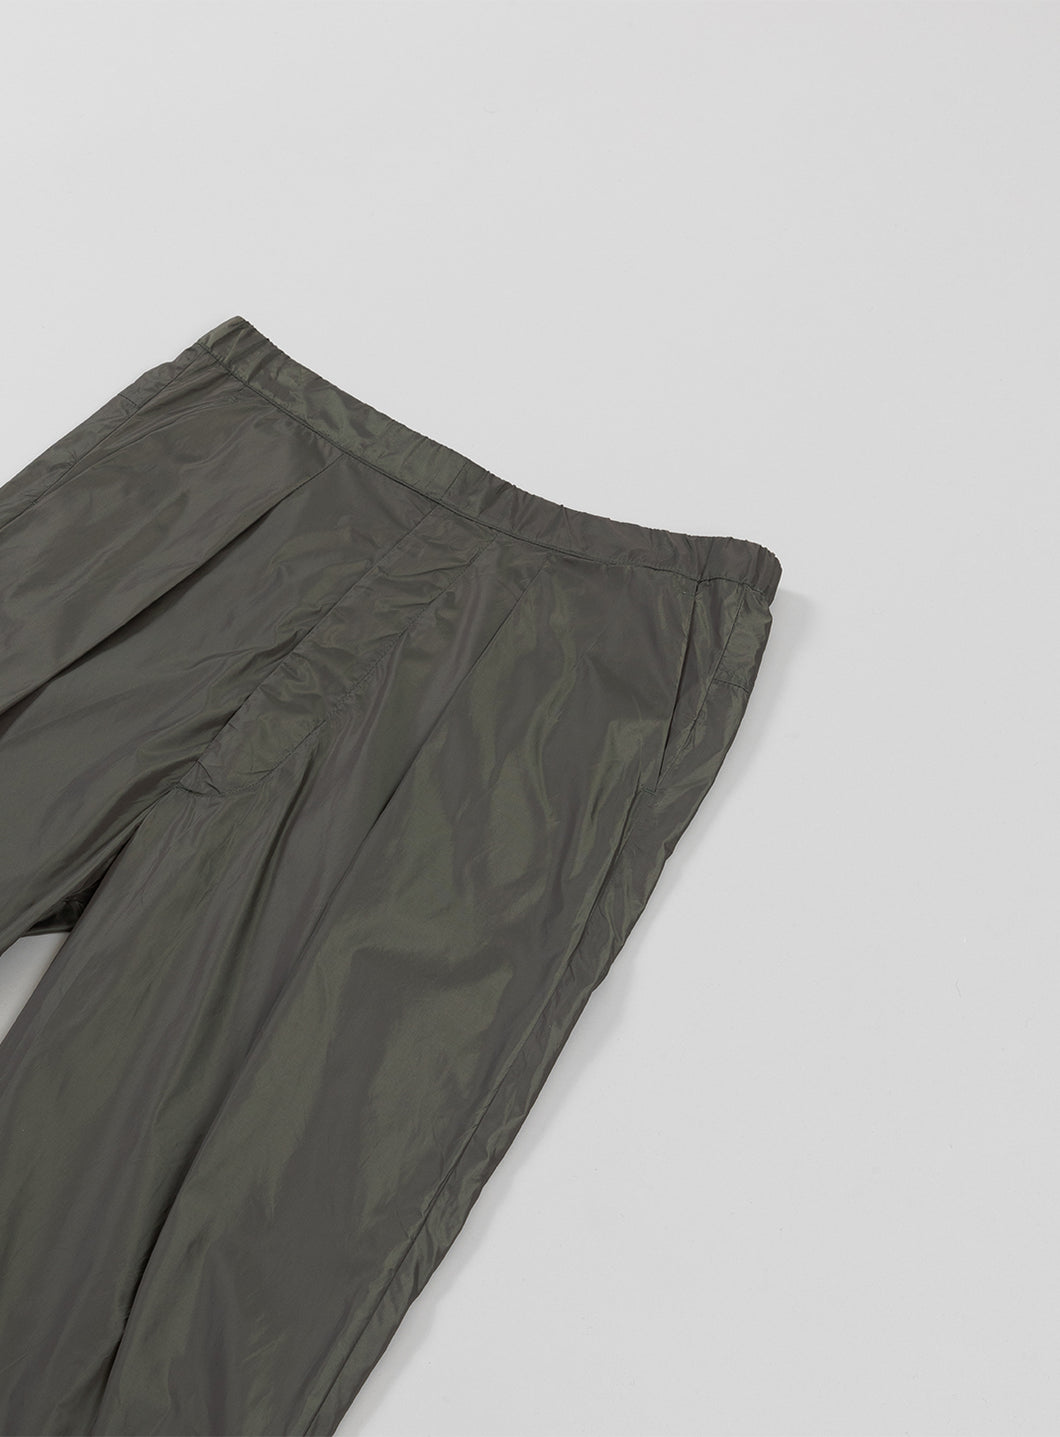 Elastic Waist Pants with Deep Pleats in Olive Nylon